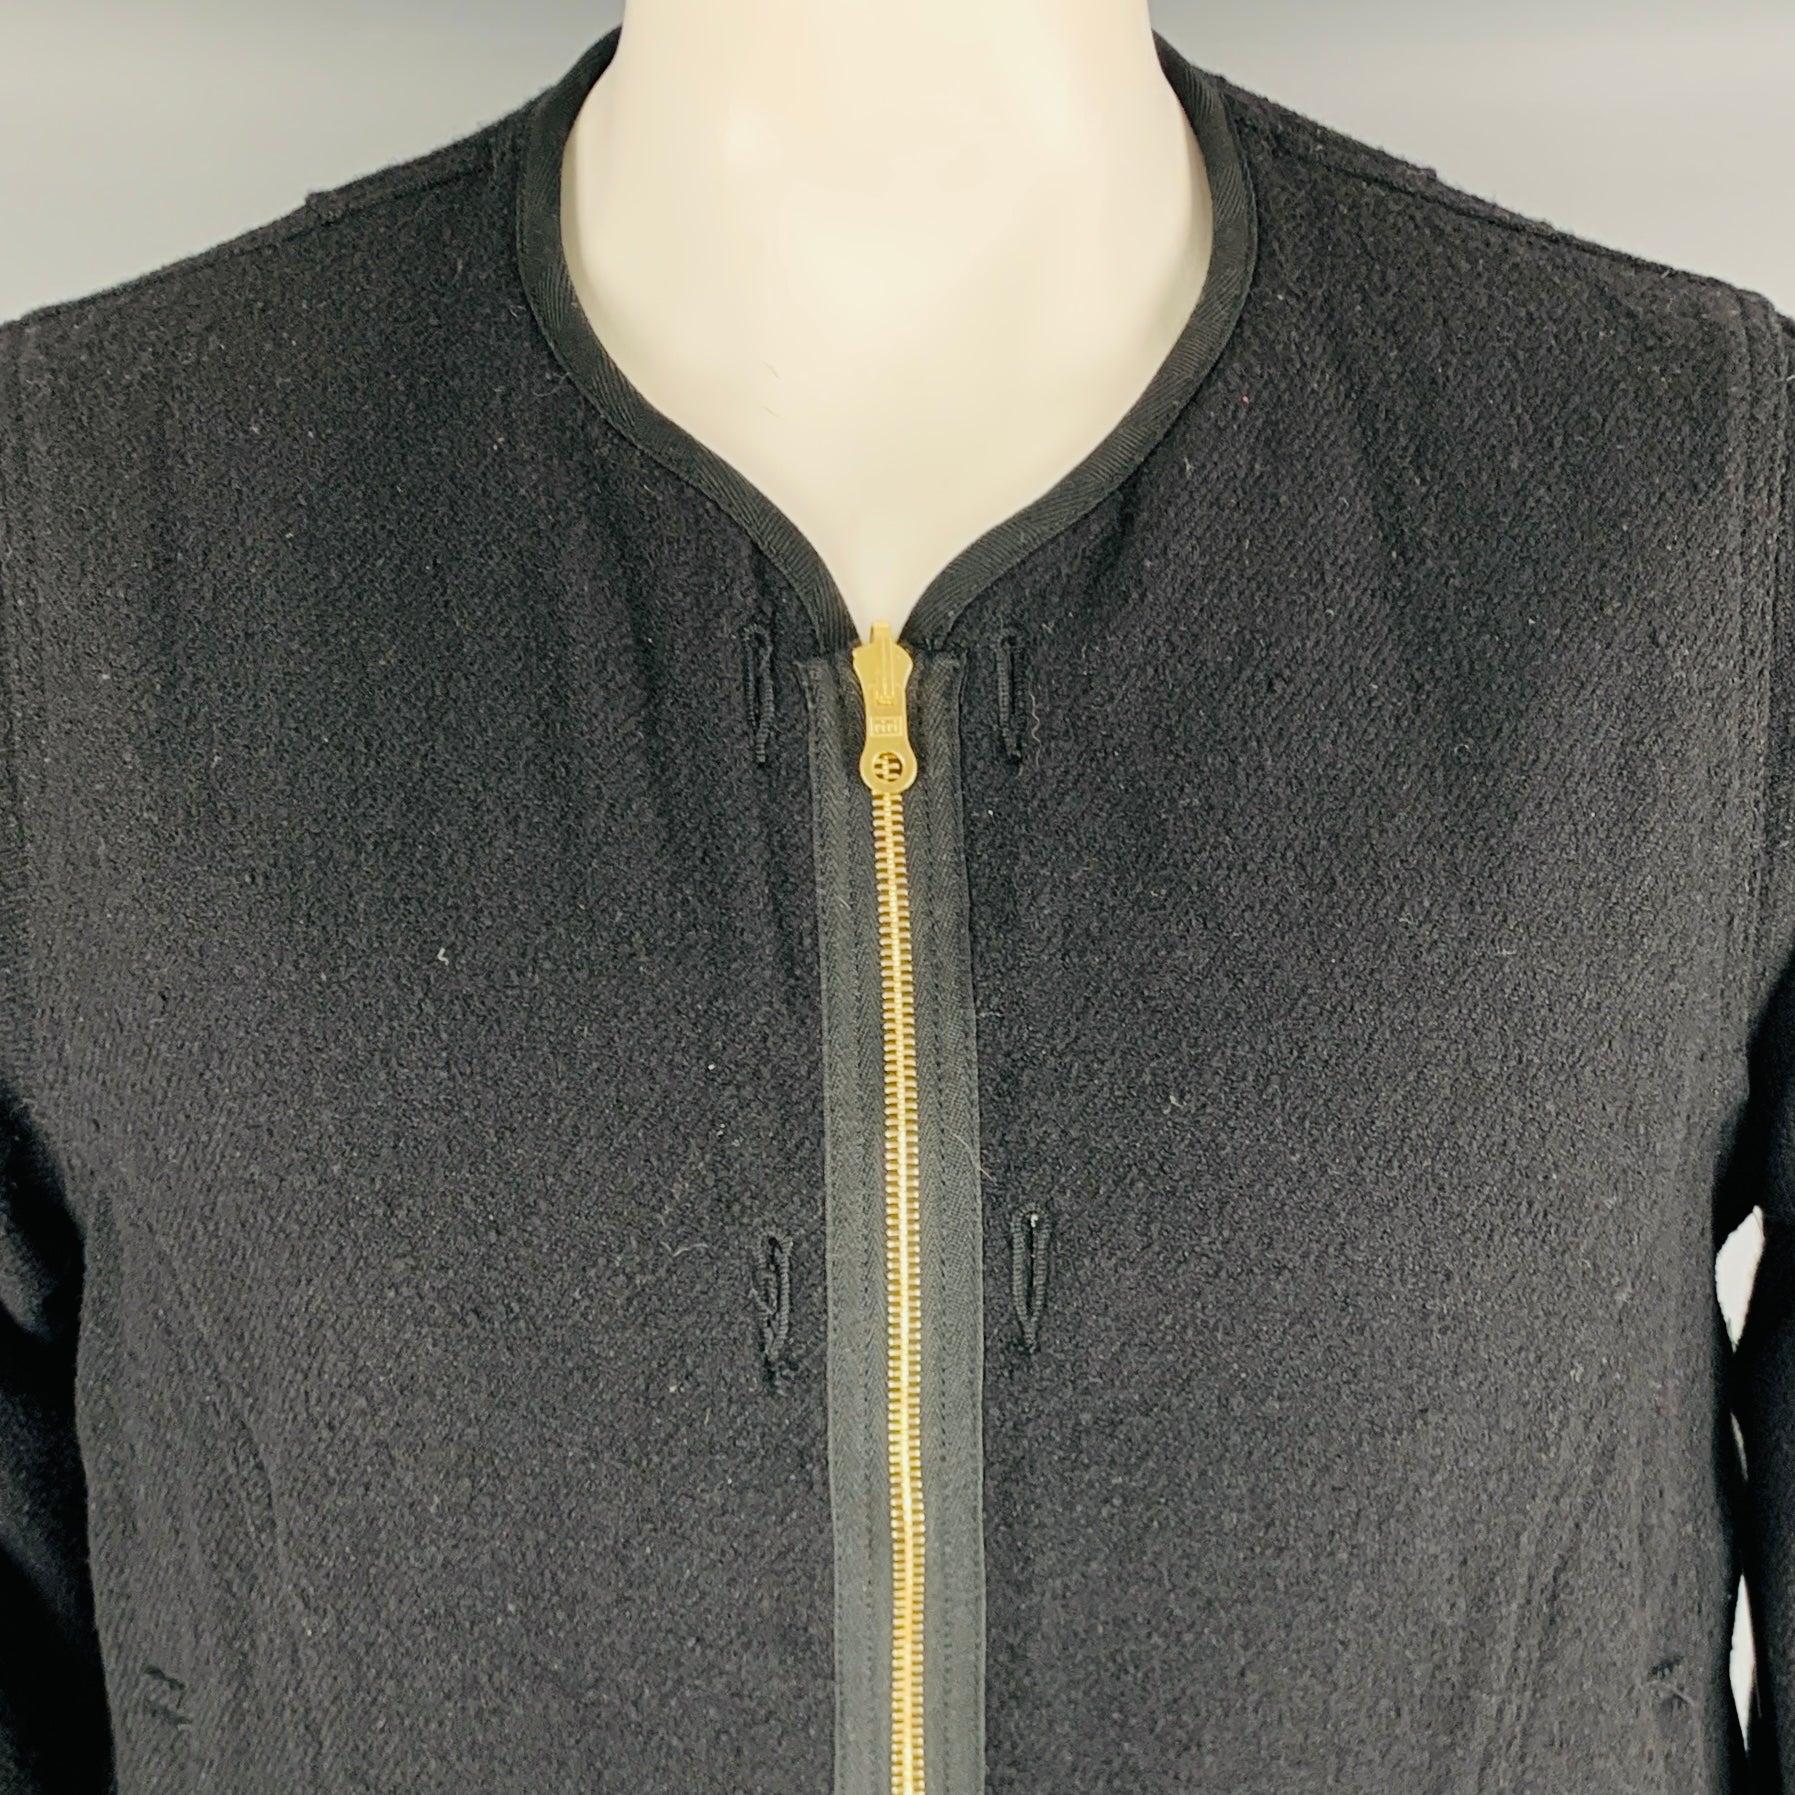 VISVIM -Wawona Down Jacket -Size L Black Beige Tweed Wool Linen Zip Up Coat Bon état - En vente à San Francisco, CA